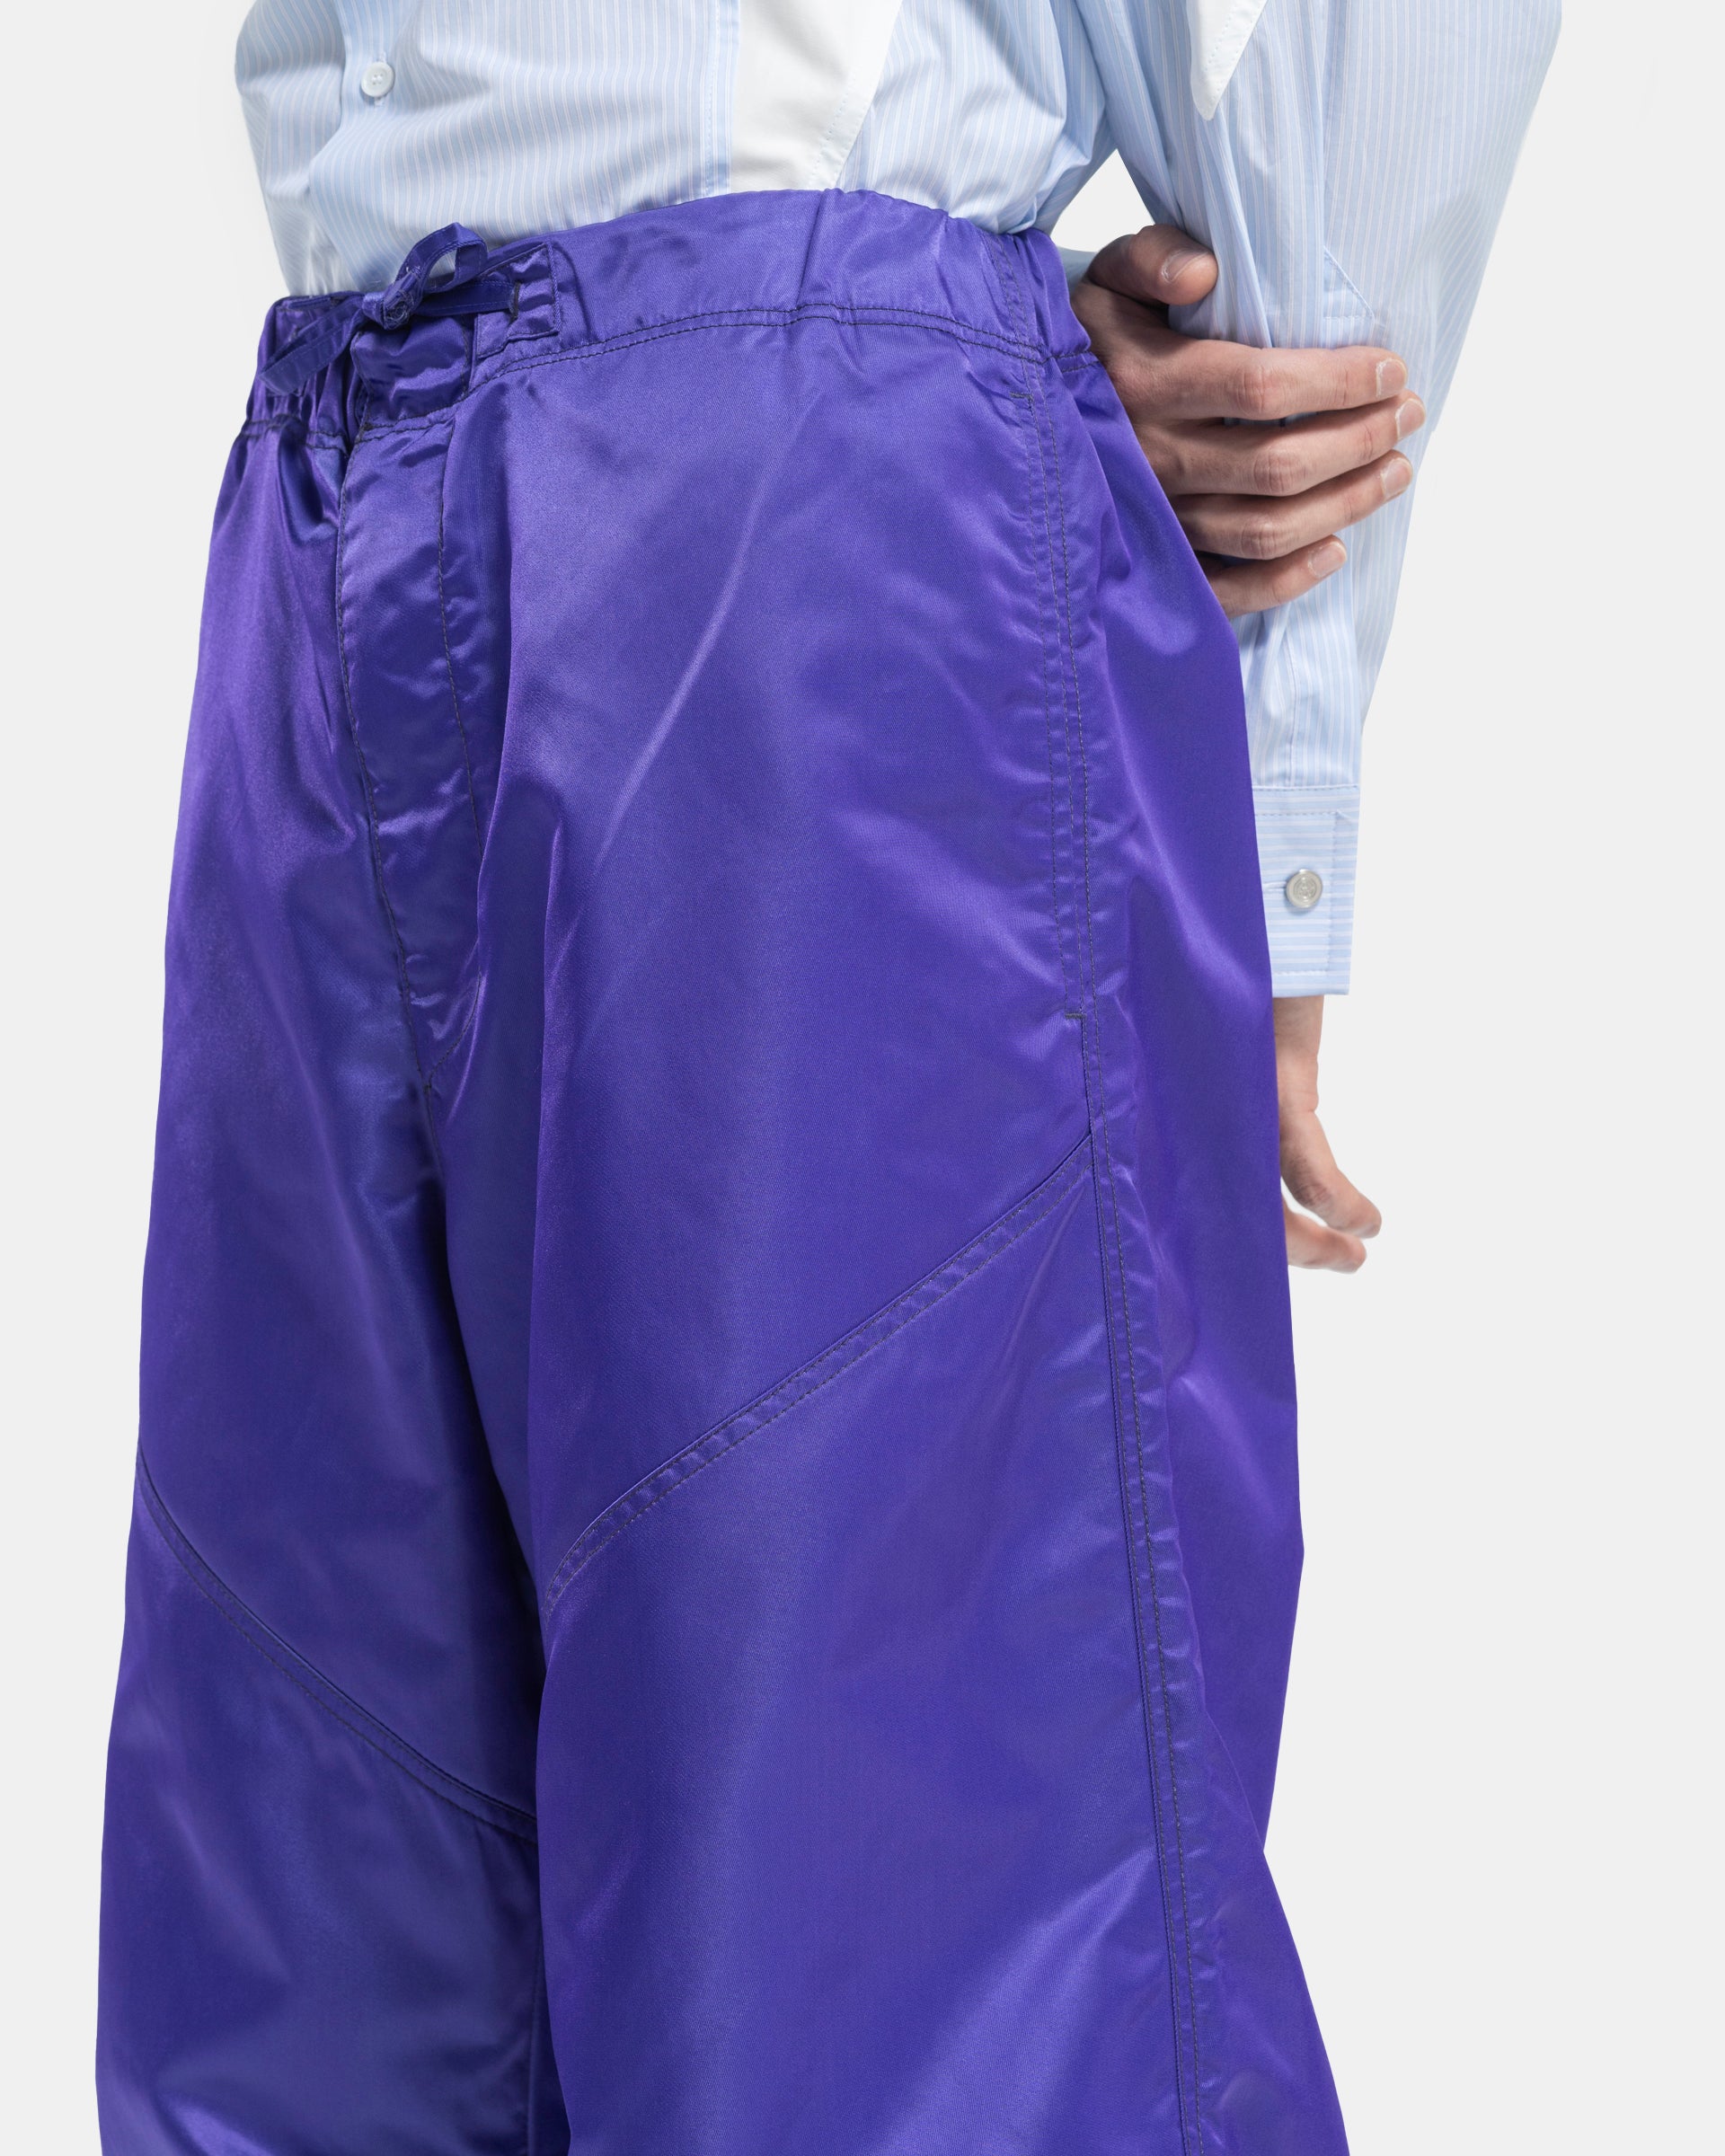 Provo Pants in Purple